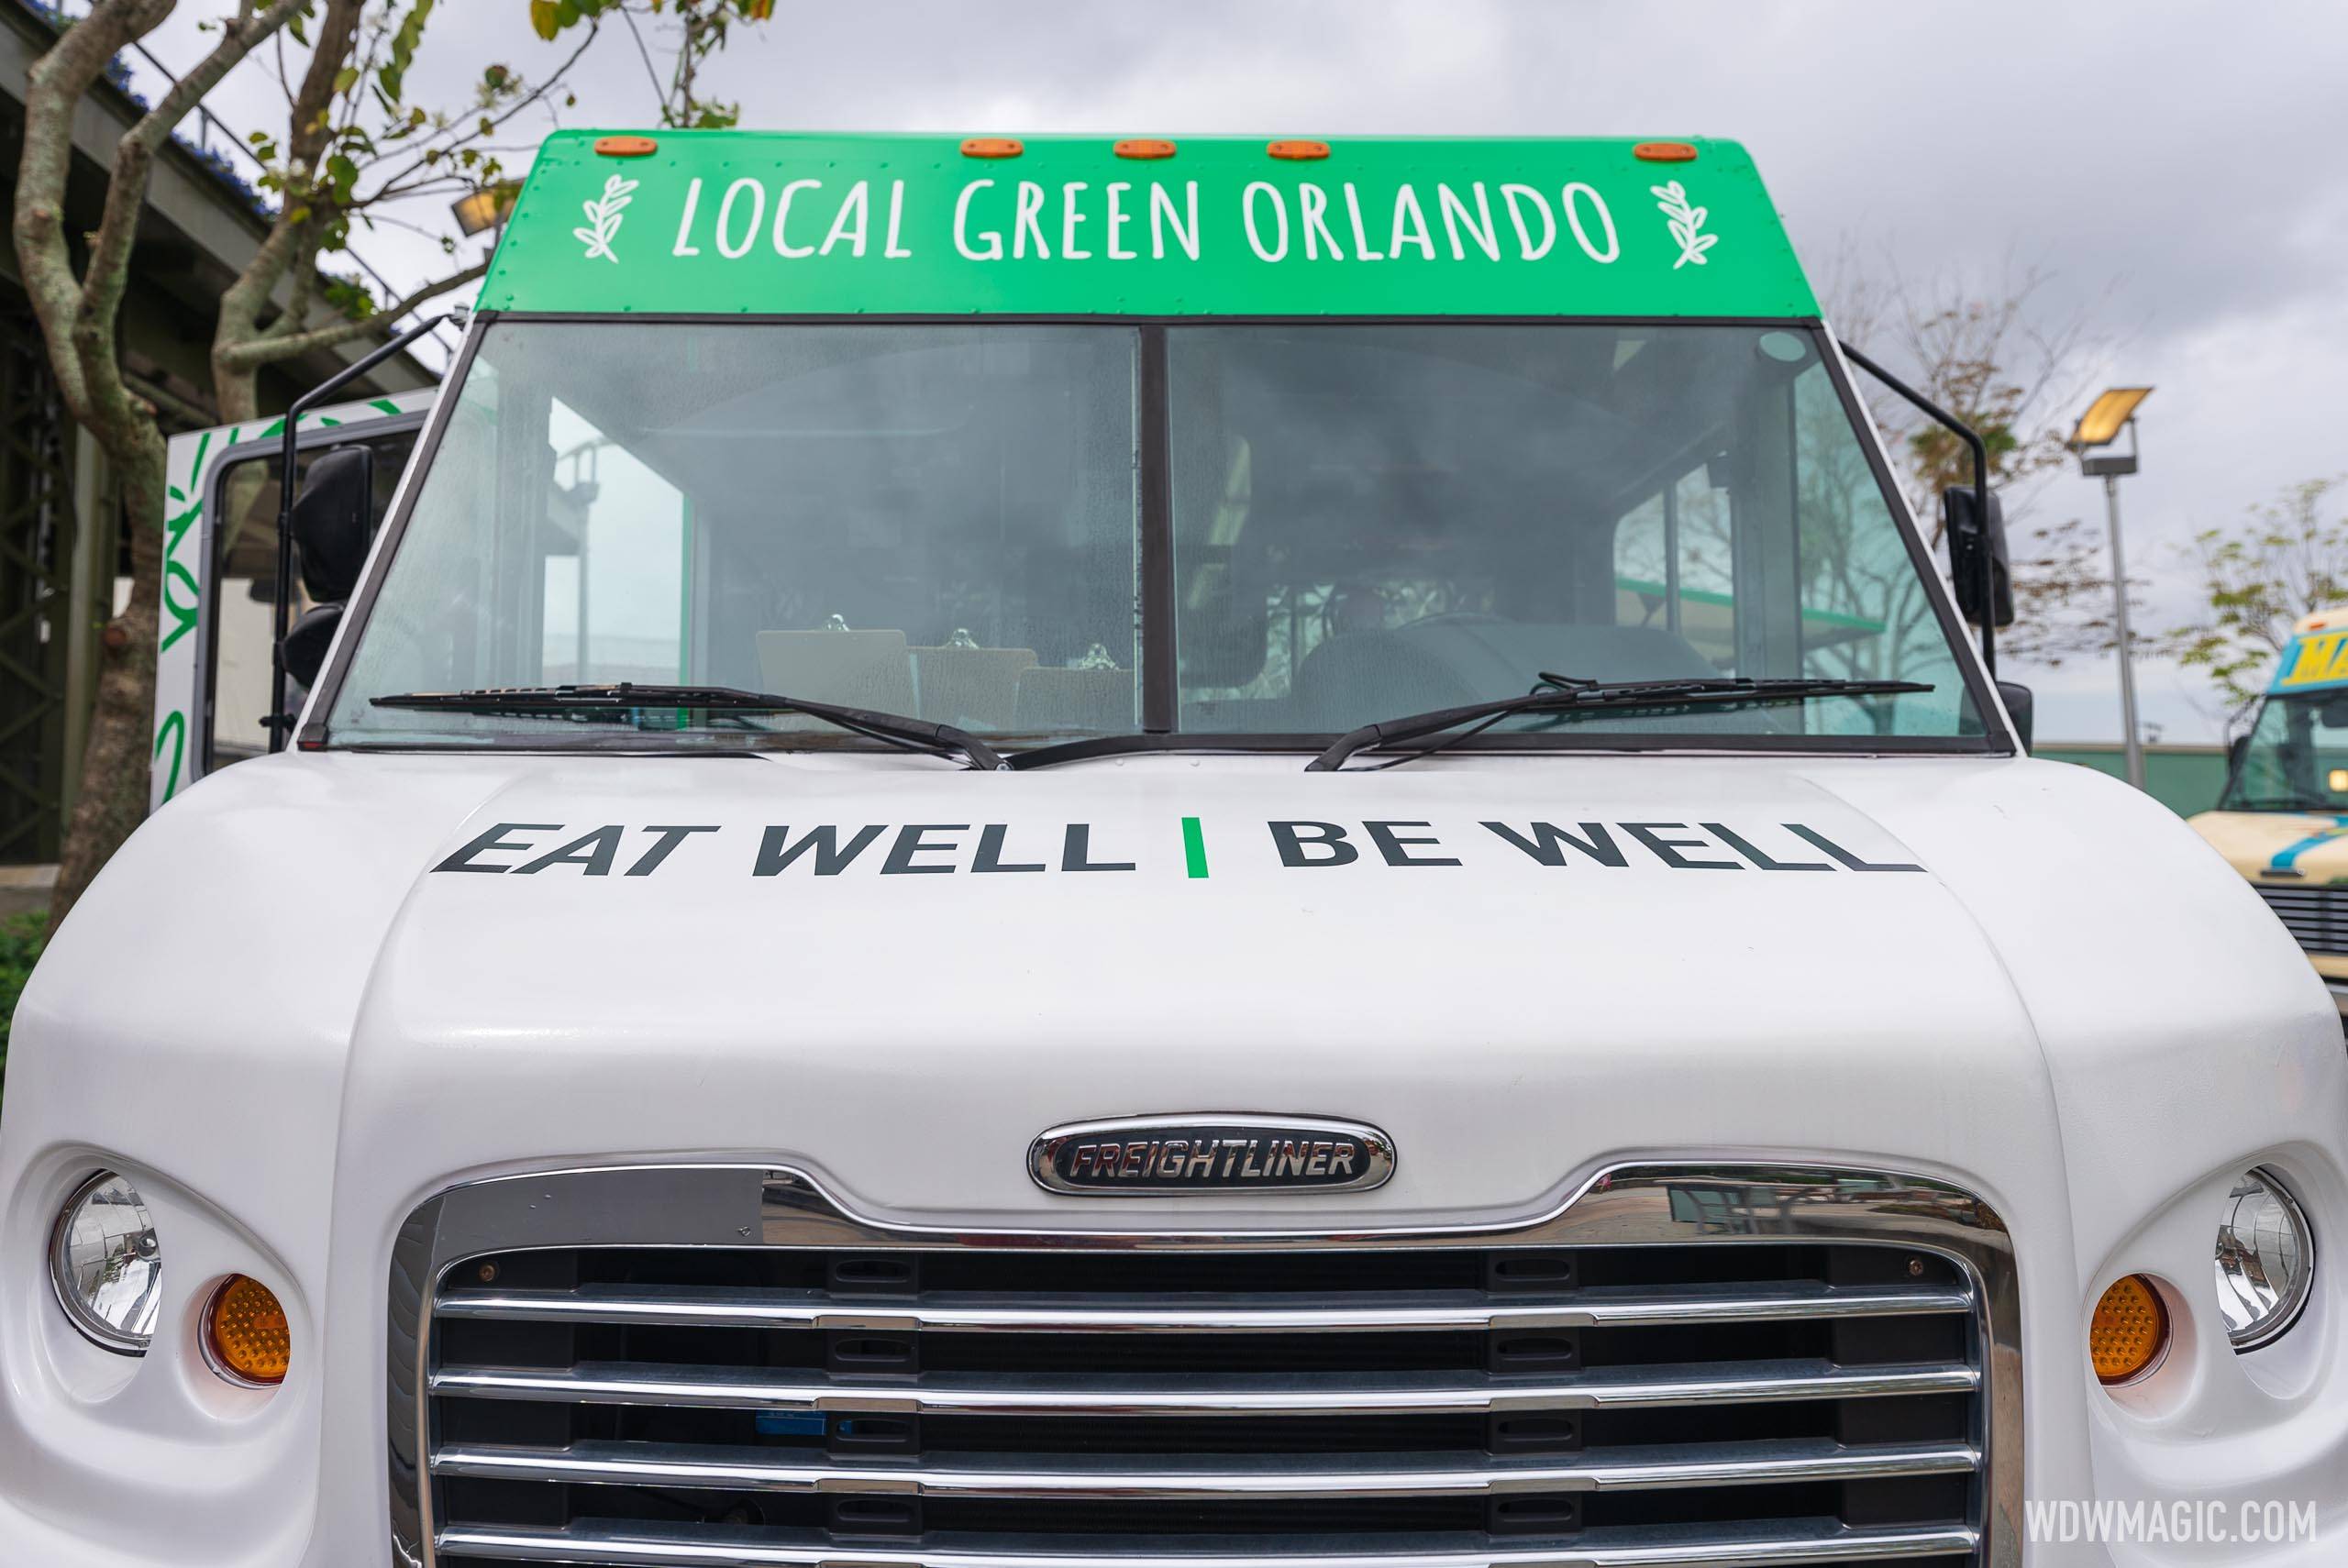 Local Green Orlando Food Truck